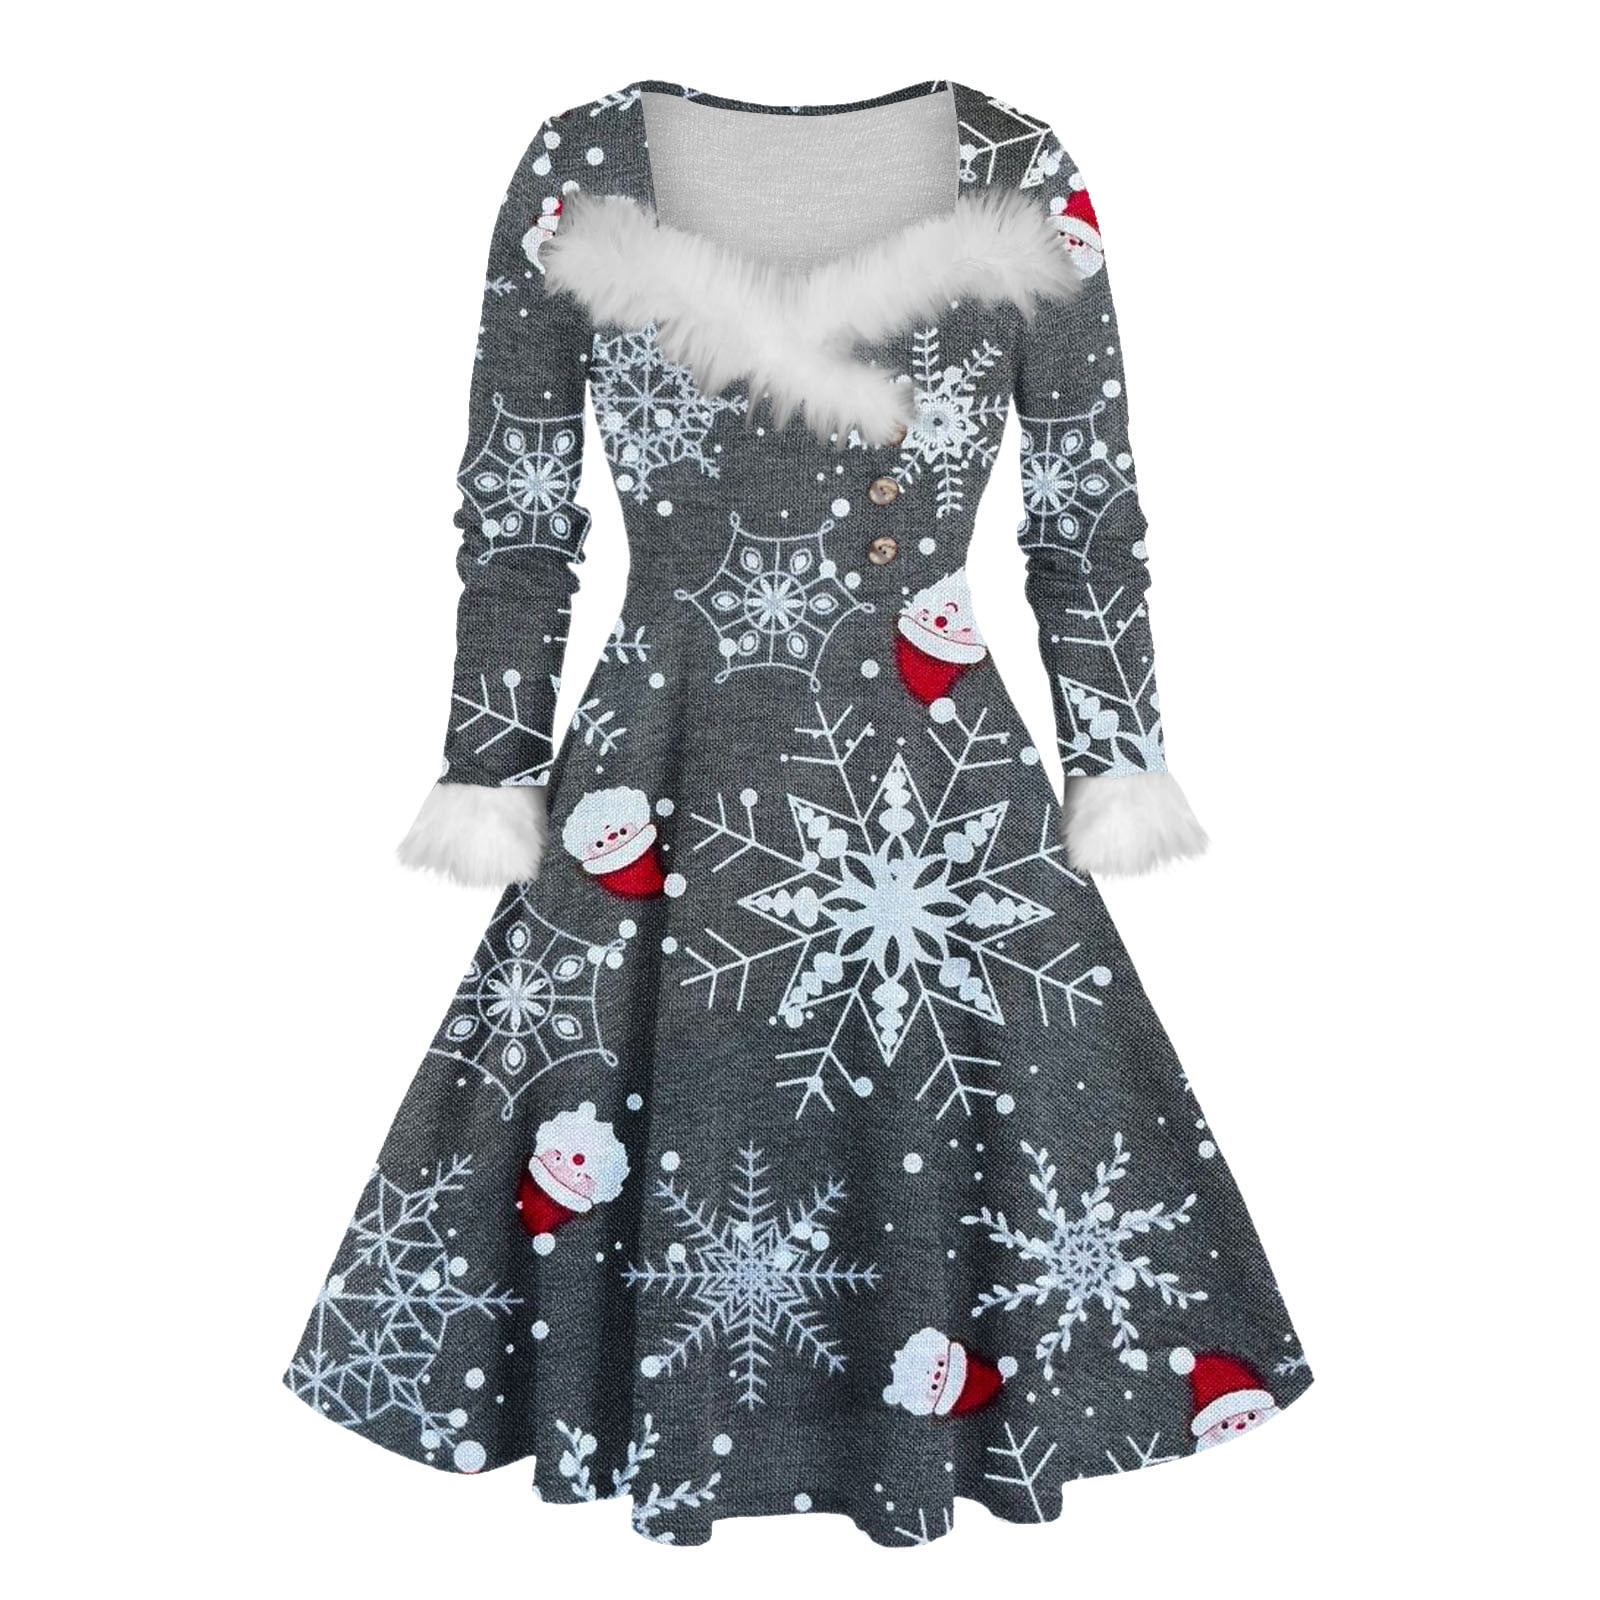 Plus Size Women Christmas Dress Polka Dot Santa Printed Short Sleeve Dress  Fashion Housewife Xmas Party Dresses(XL-5XL)